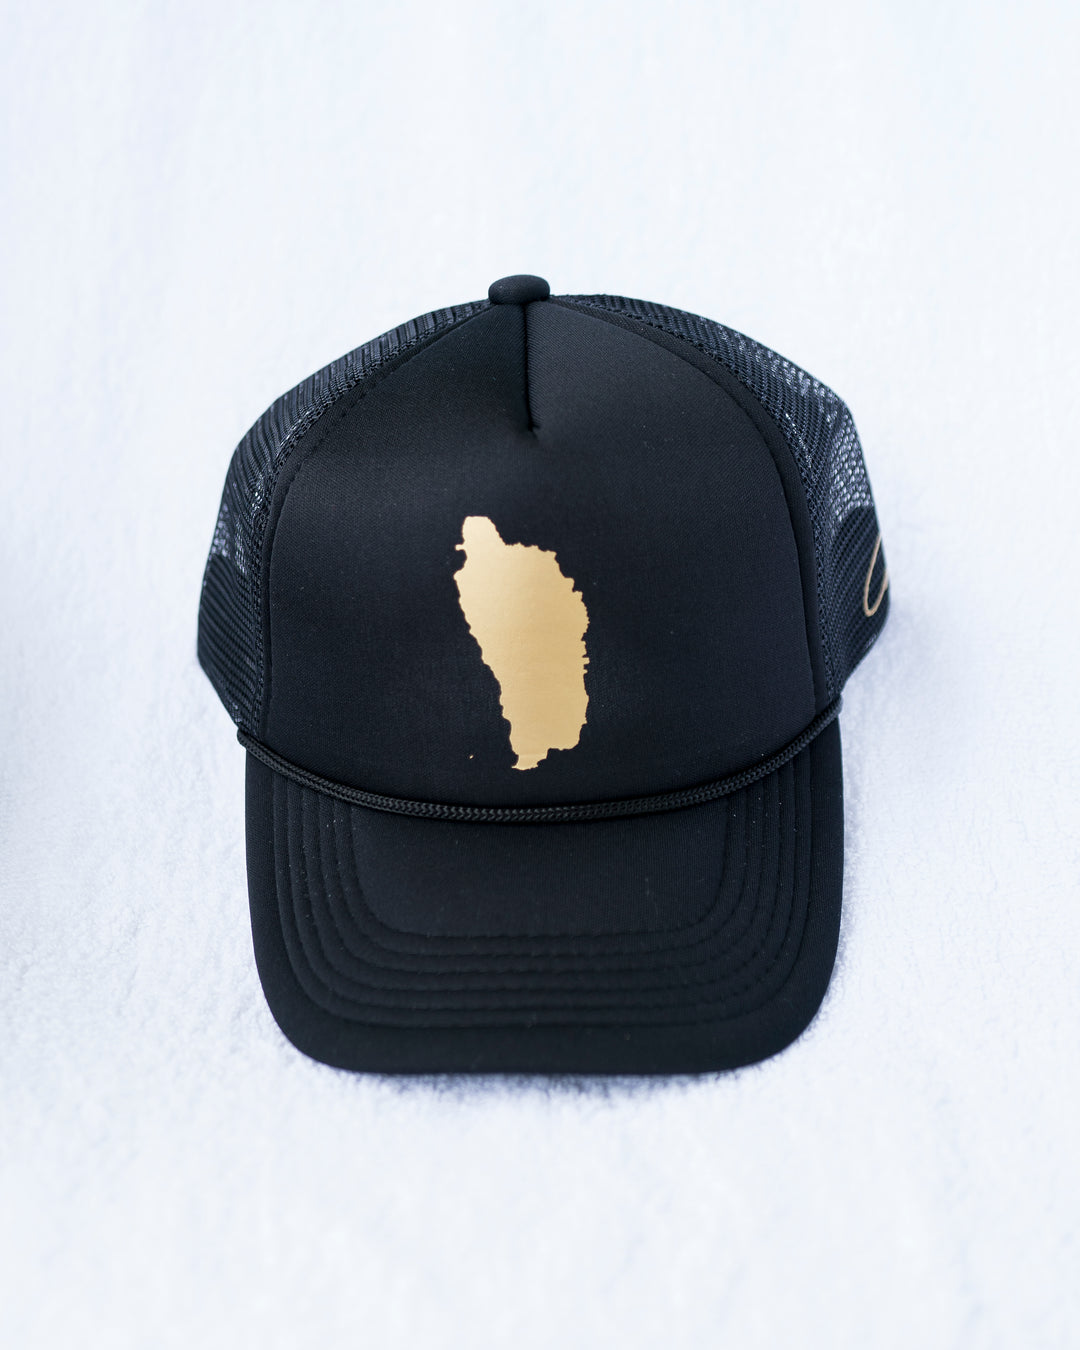 DOMINICA GOLD TRUCKER HAT